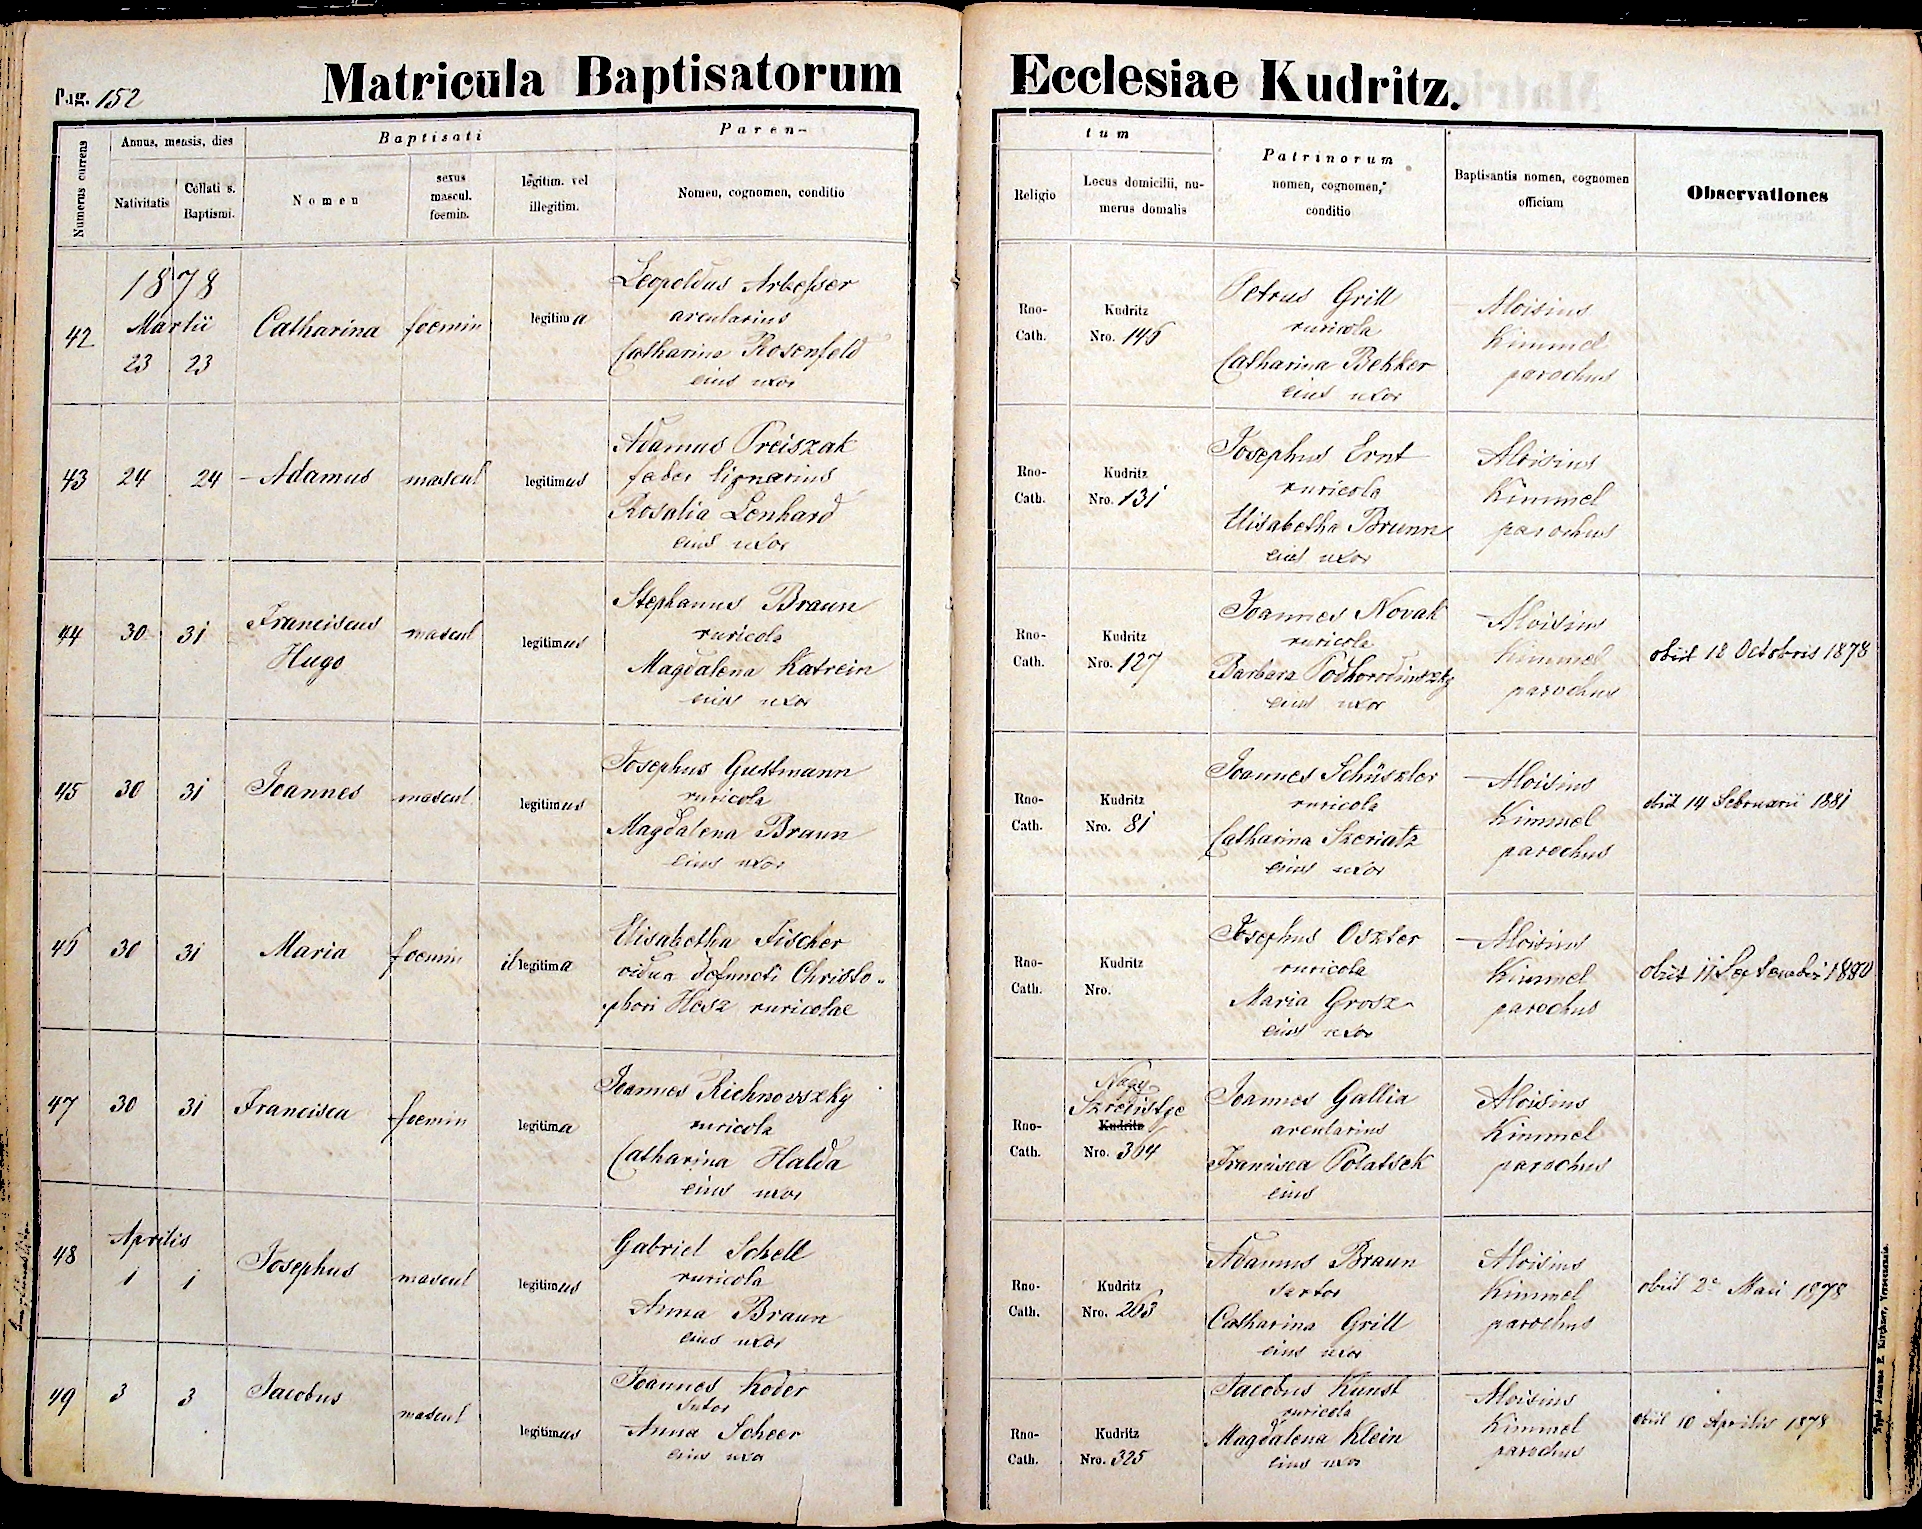 images/church_records/BIRTHS/1884-1899B/1894/152